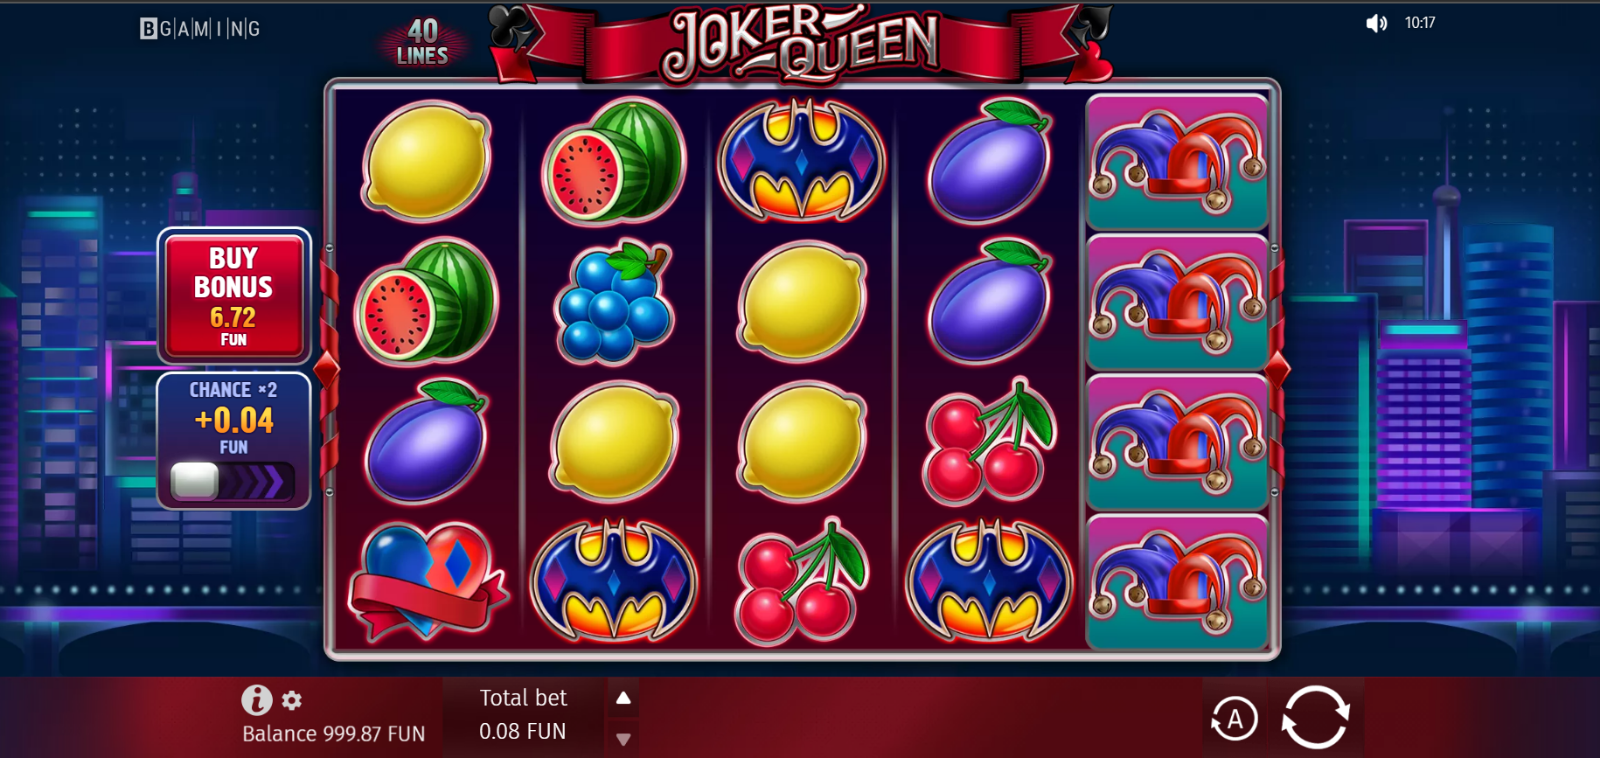 Appearance of the Joker Queen slot machine